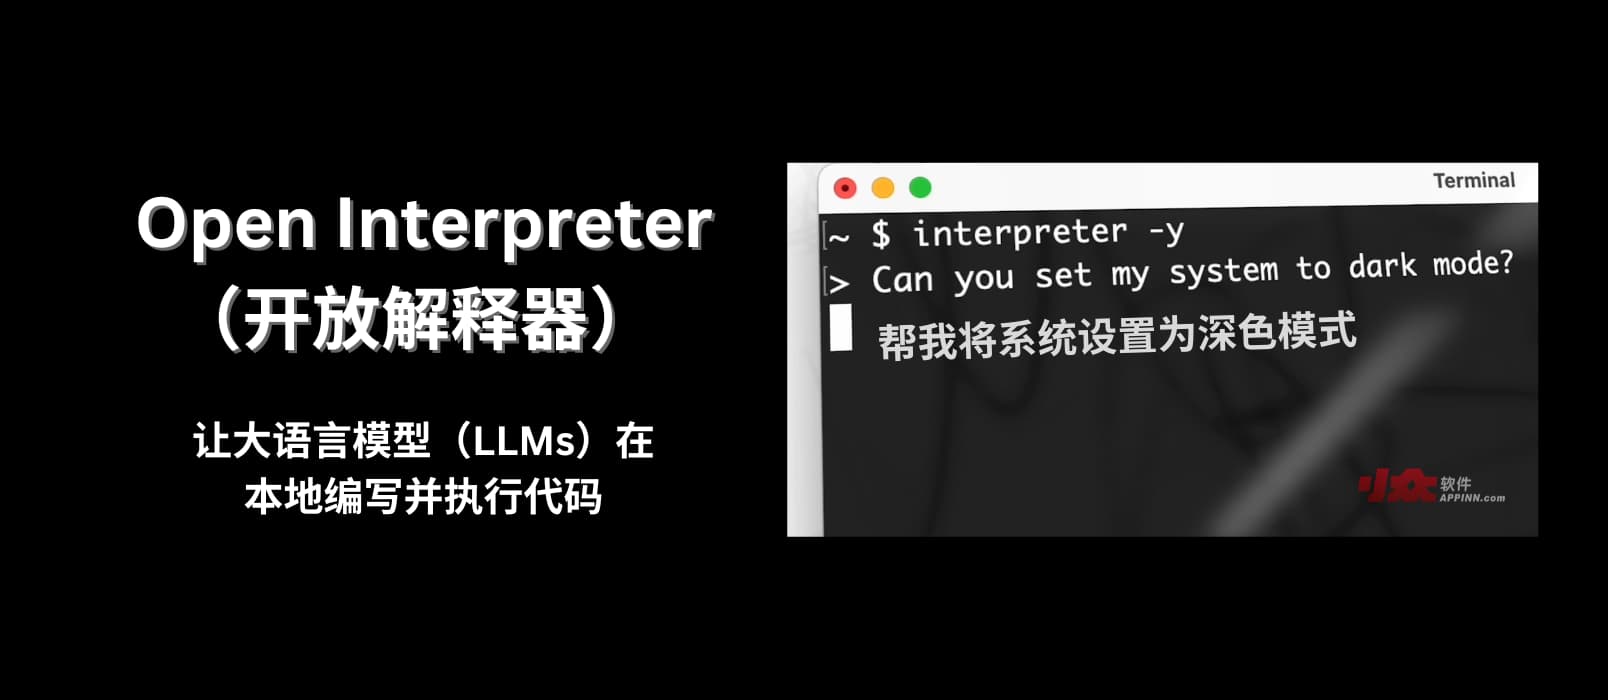 Open Interpreter - 可能门槛最低，让 AI 在你的电脑上执行代码